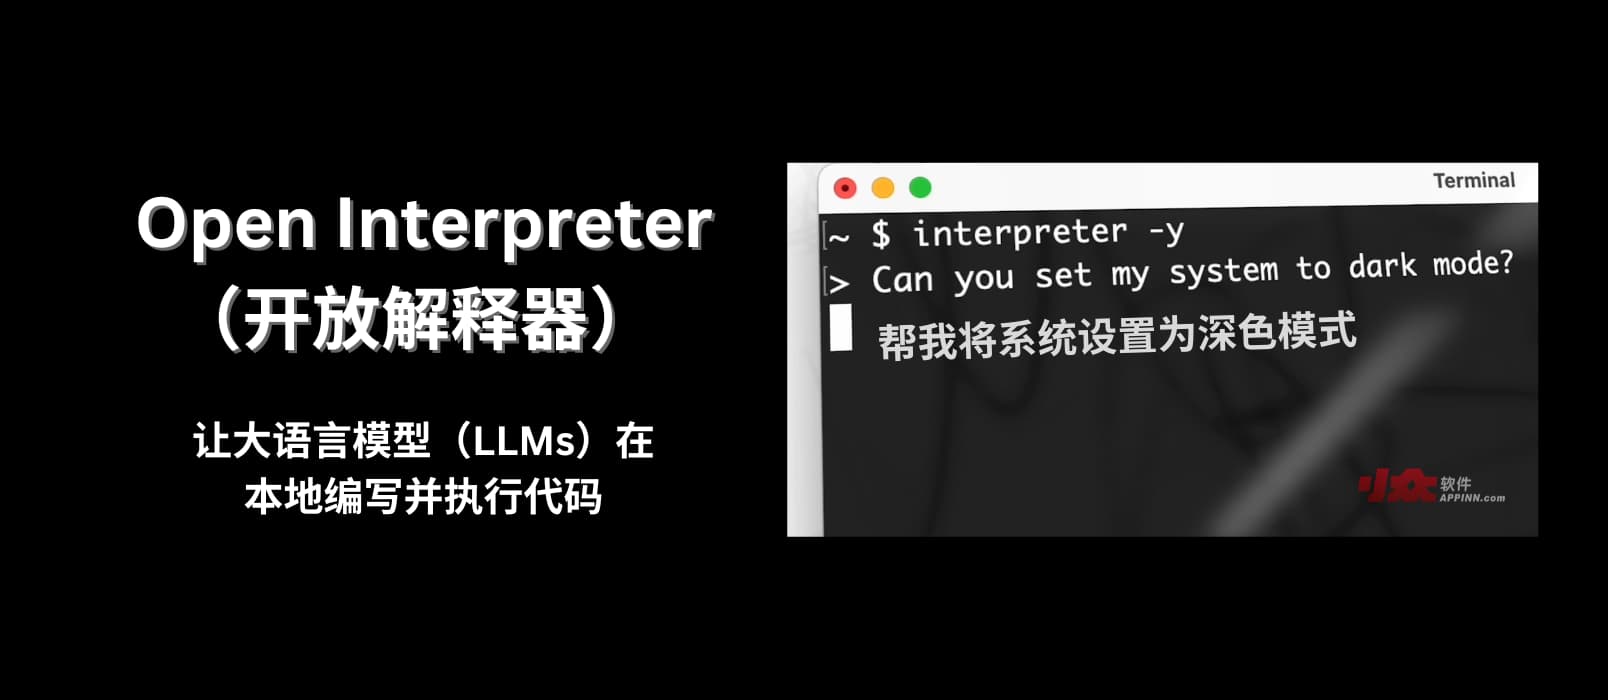 Open Interpreter - 可能门槛最低，让 AI 在你的电脑上执行代码